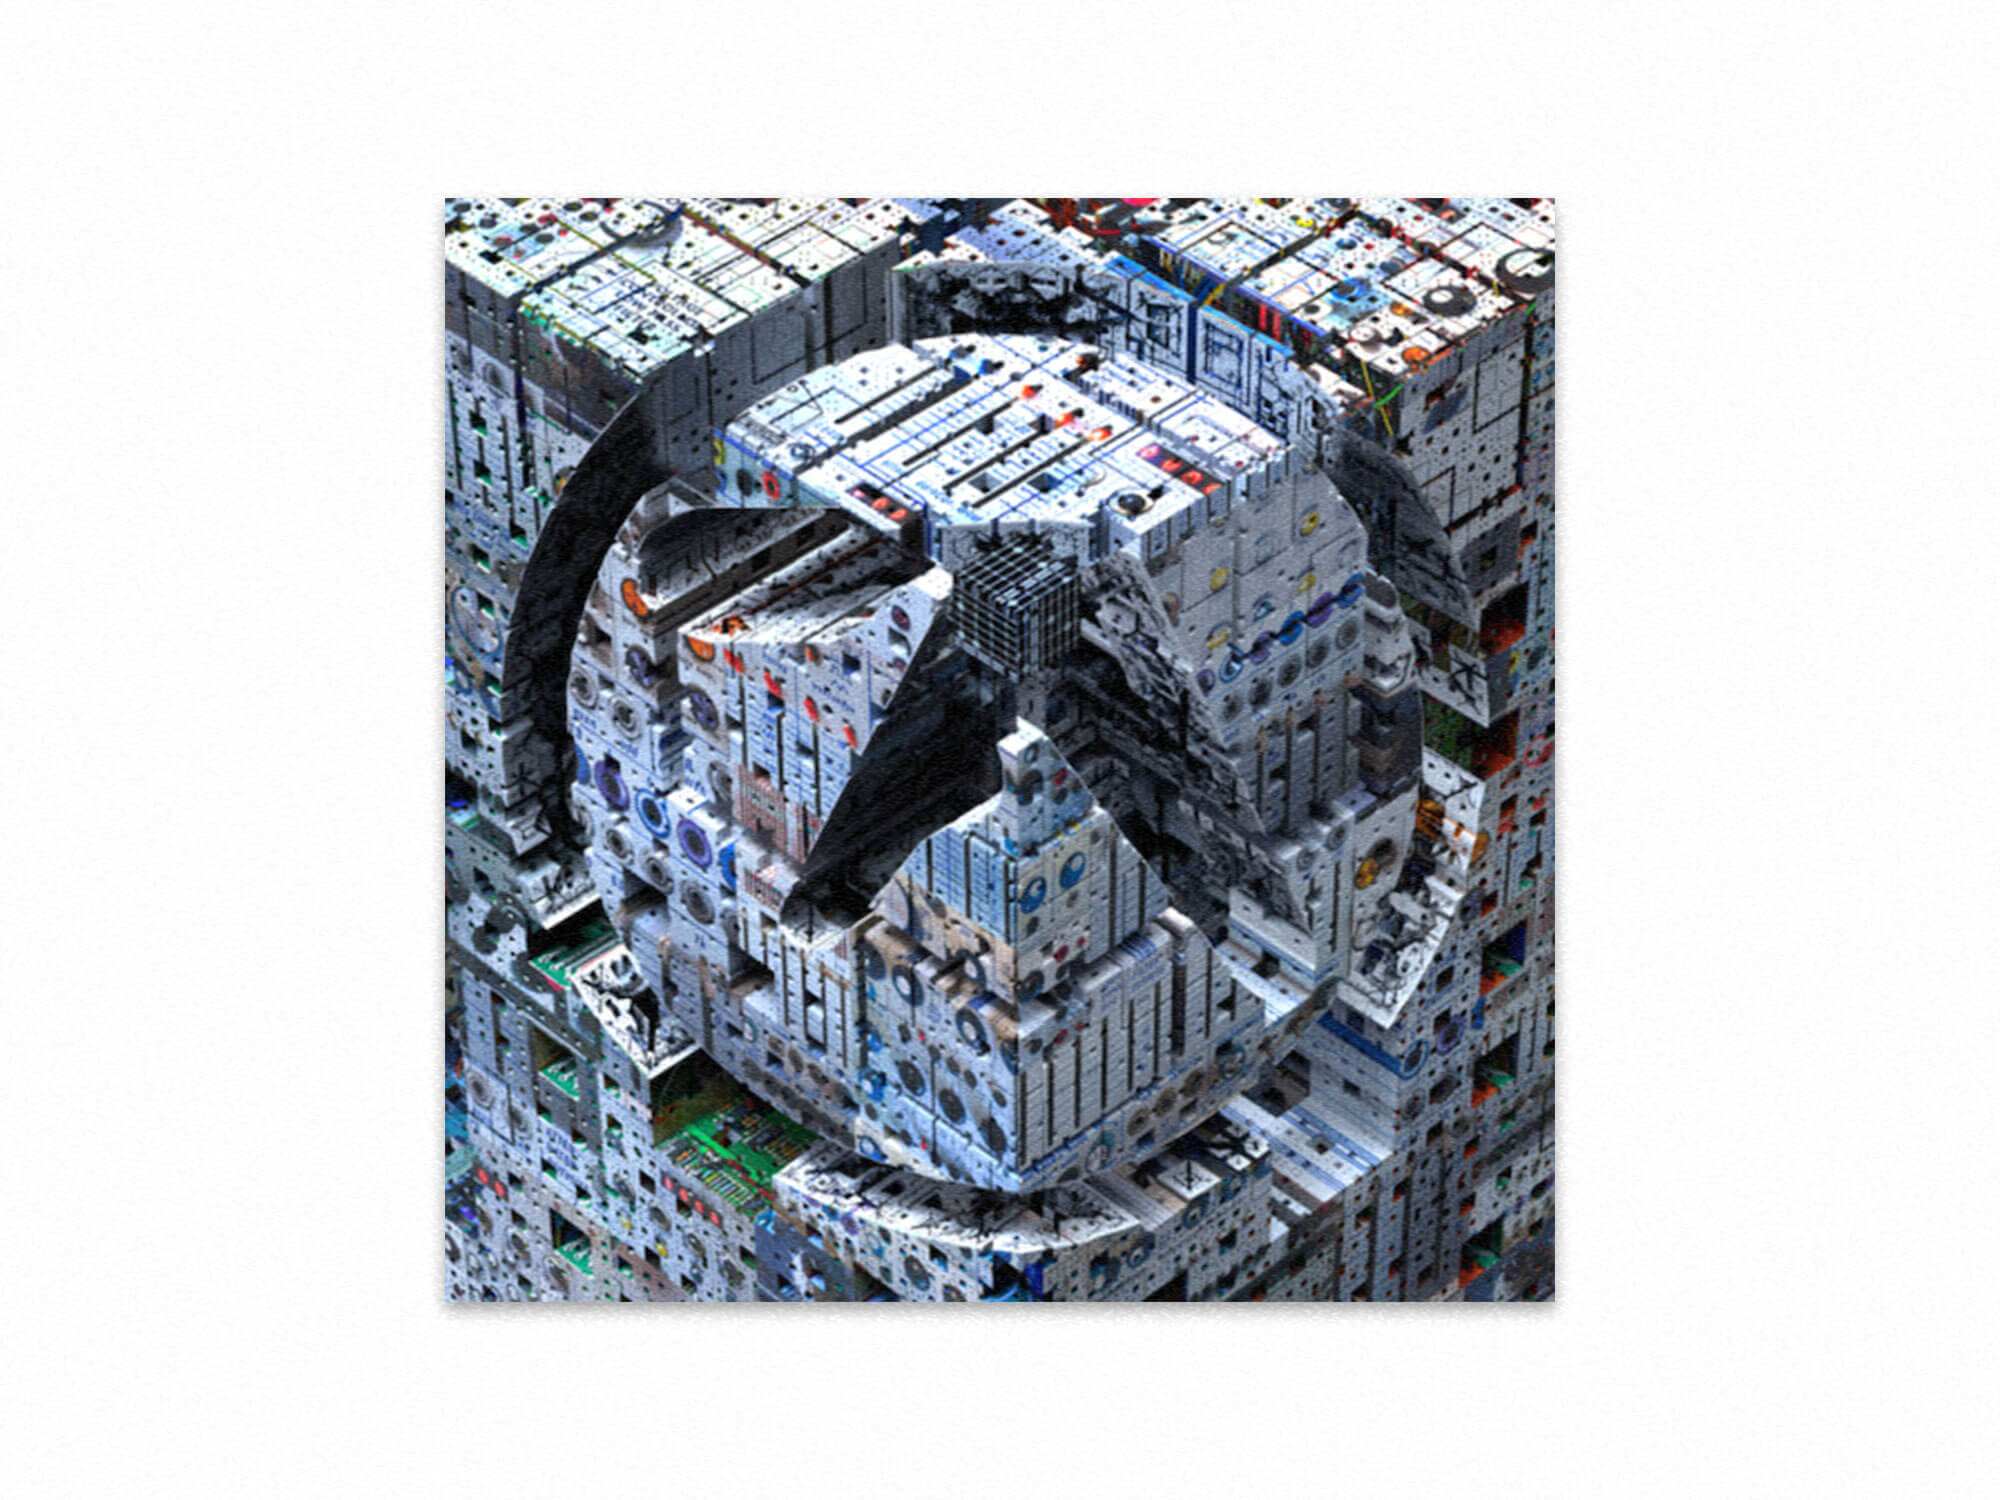 Aphex Twin Blackbox Life Recorder 21f / in a room7 F760 EP